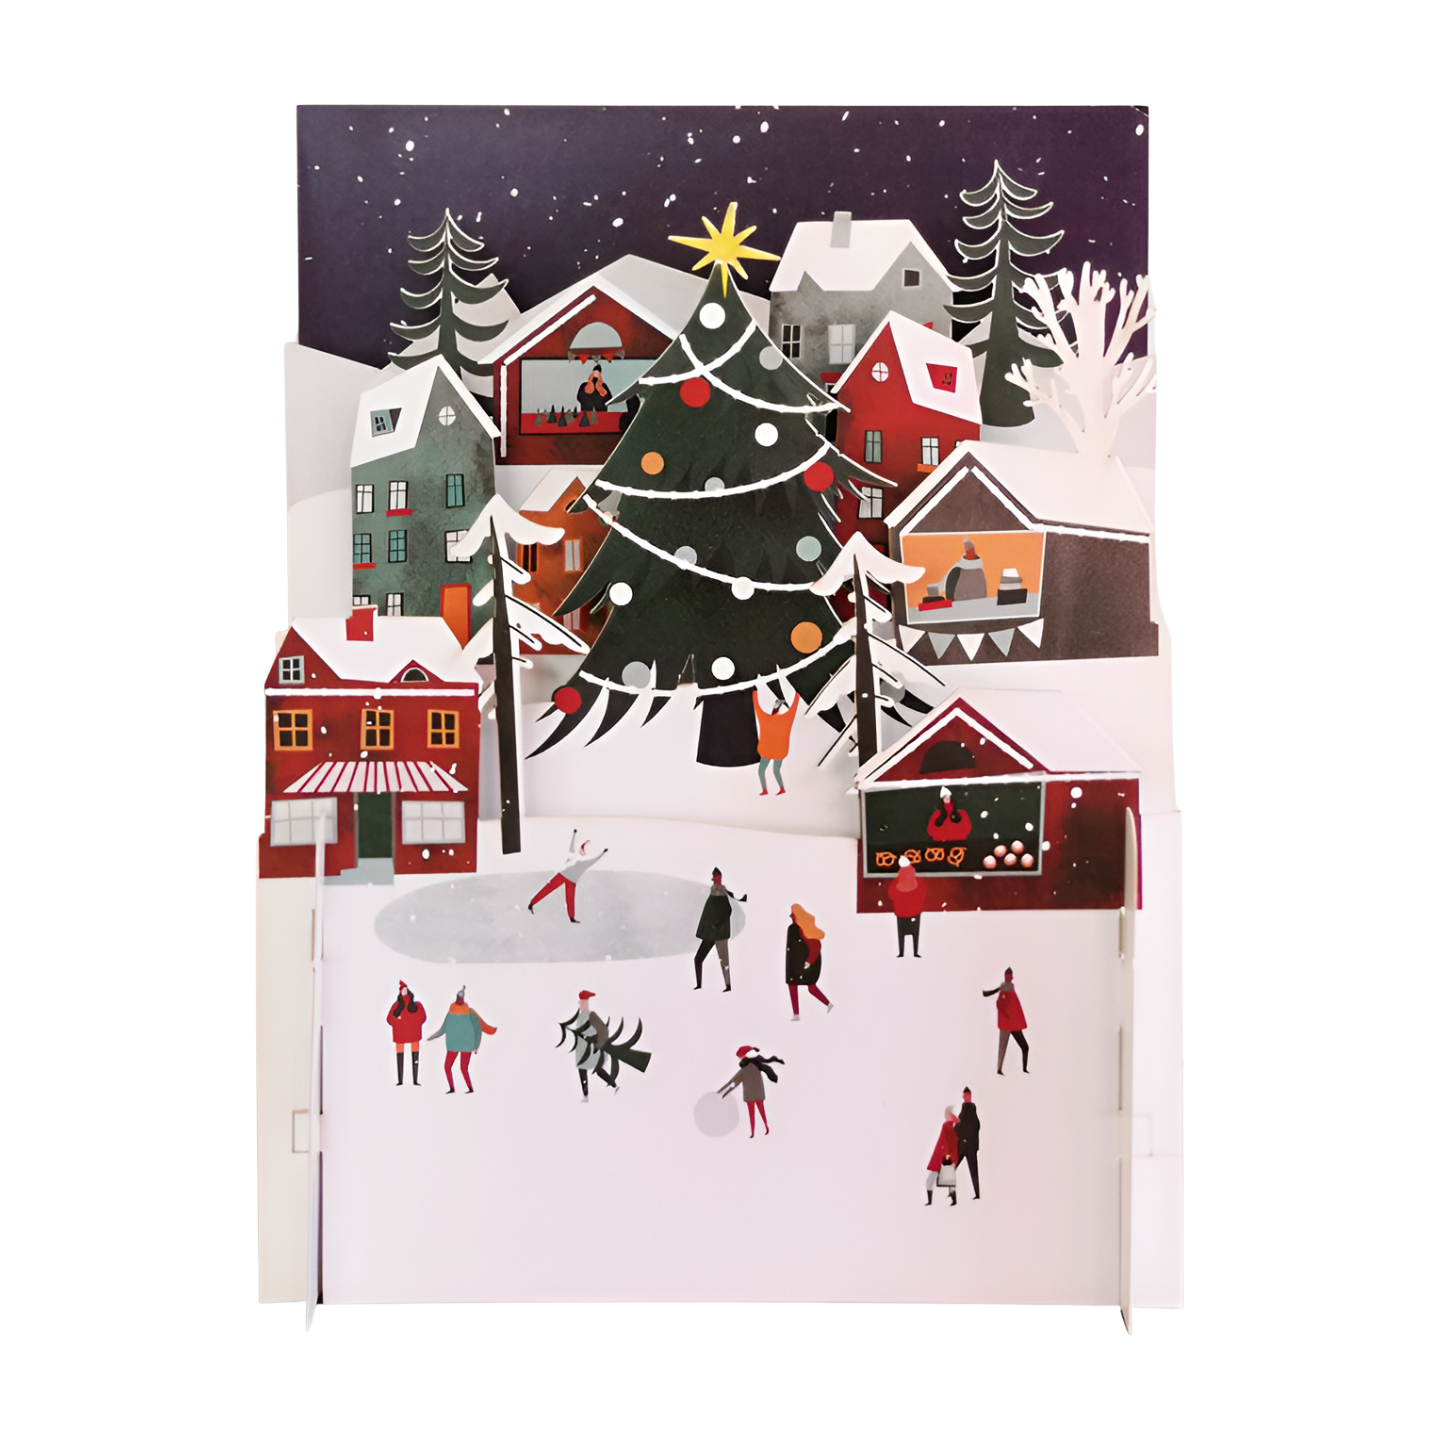 Festive Xmas Village Ice Skating 3D Pop Up Christmas Greeting Card